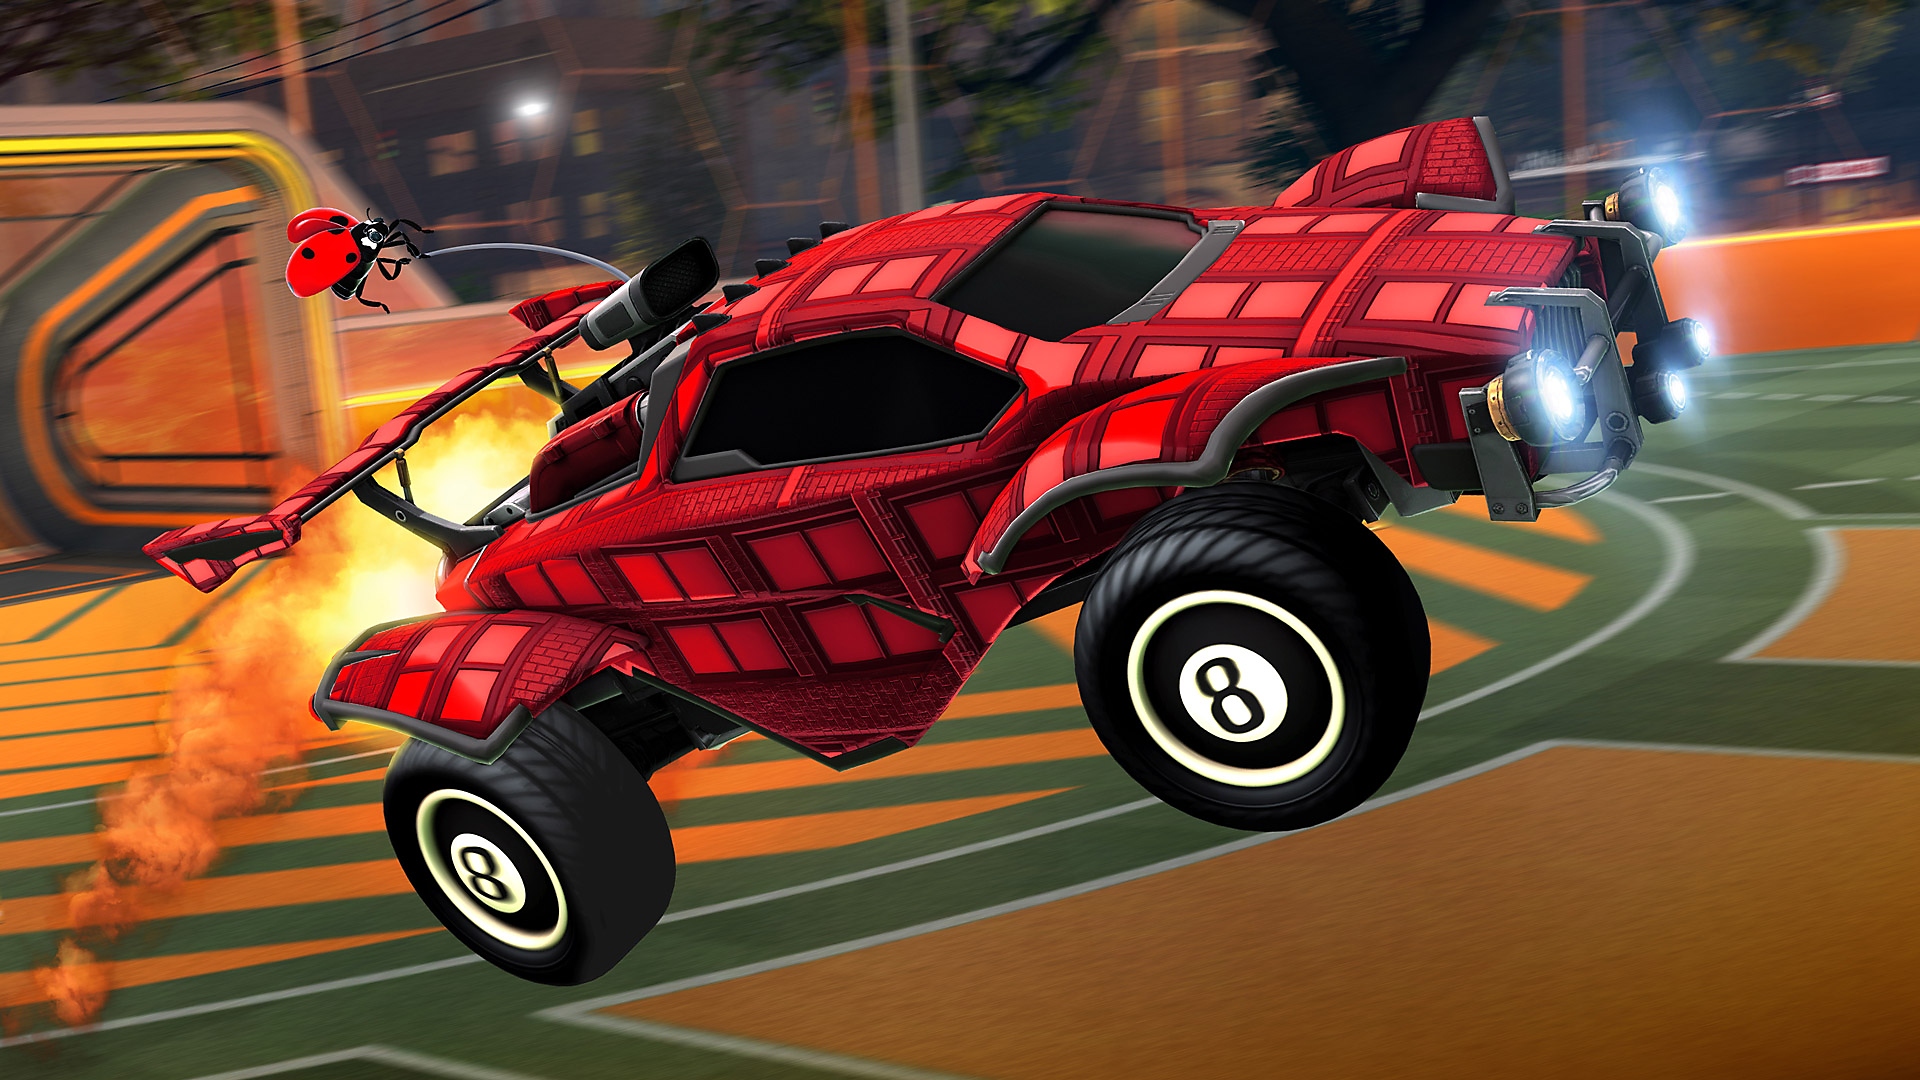 Rocket League – снимок экрана, на котором изображена красная машина